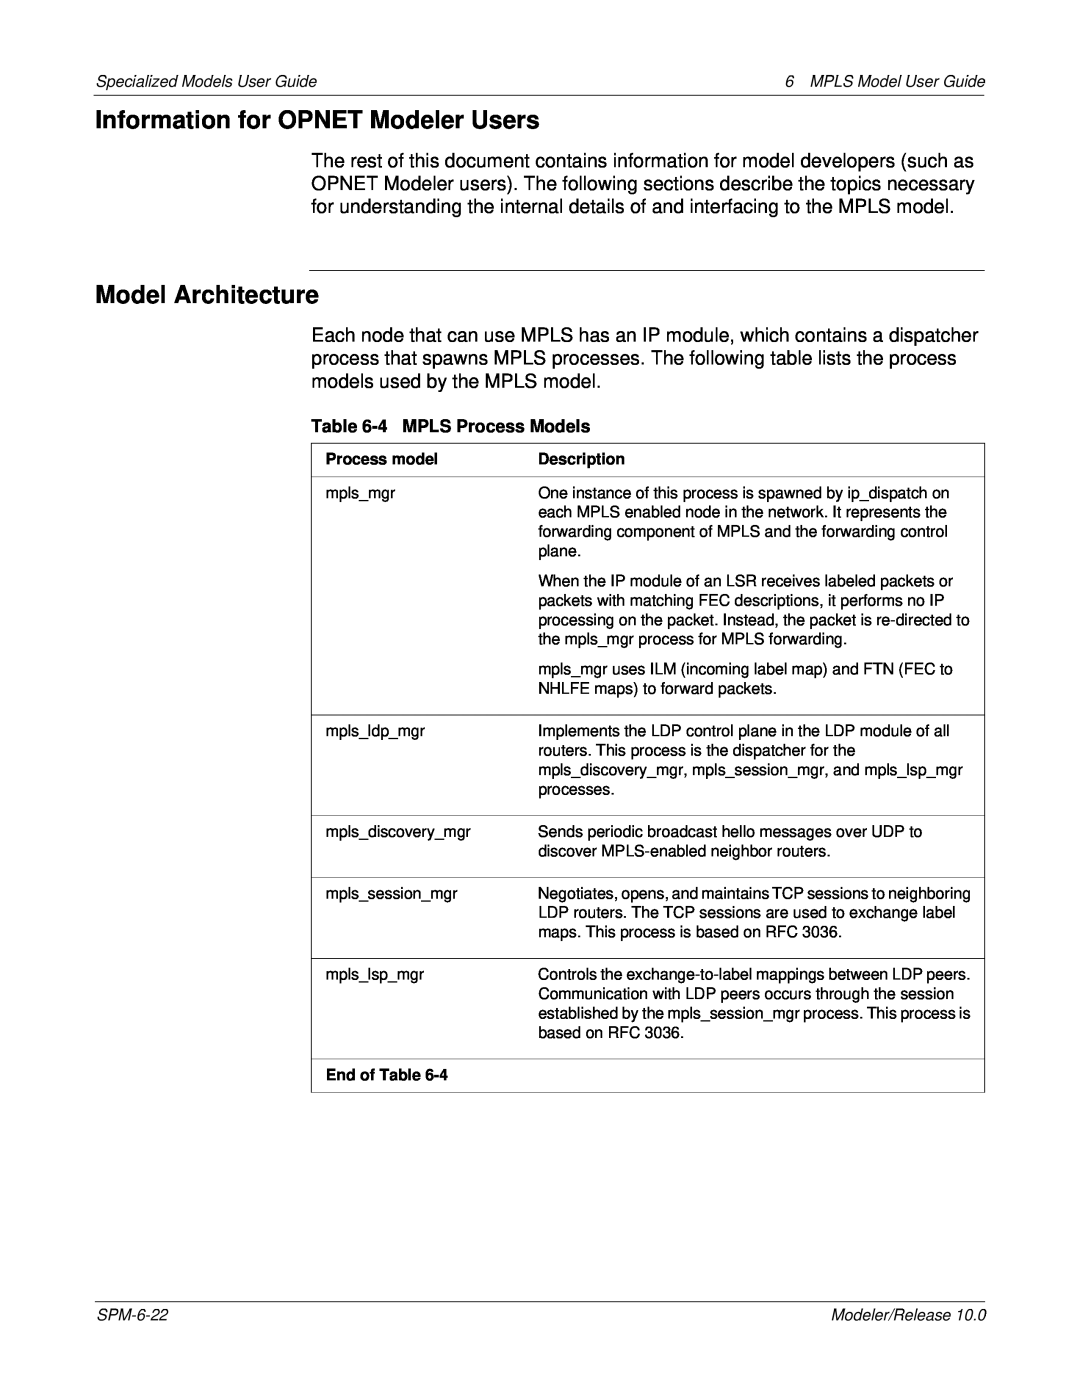 IBM 6 MPLS manual Information for OPNET Modeler Users, Model Architecture, 4 MPLS Process Models 